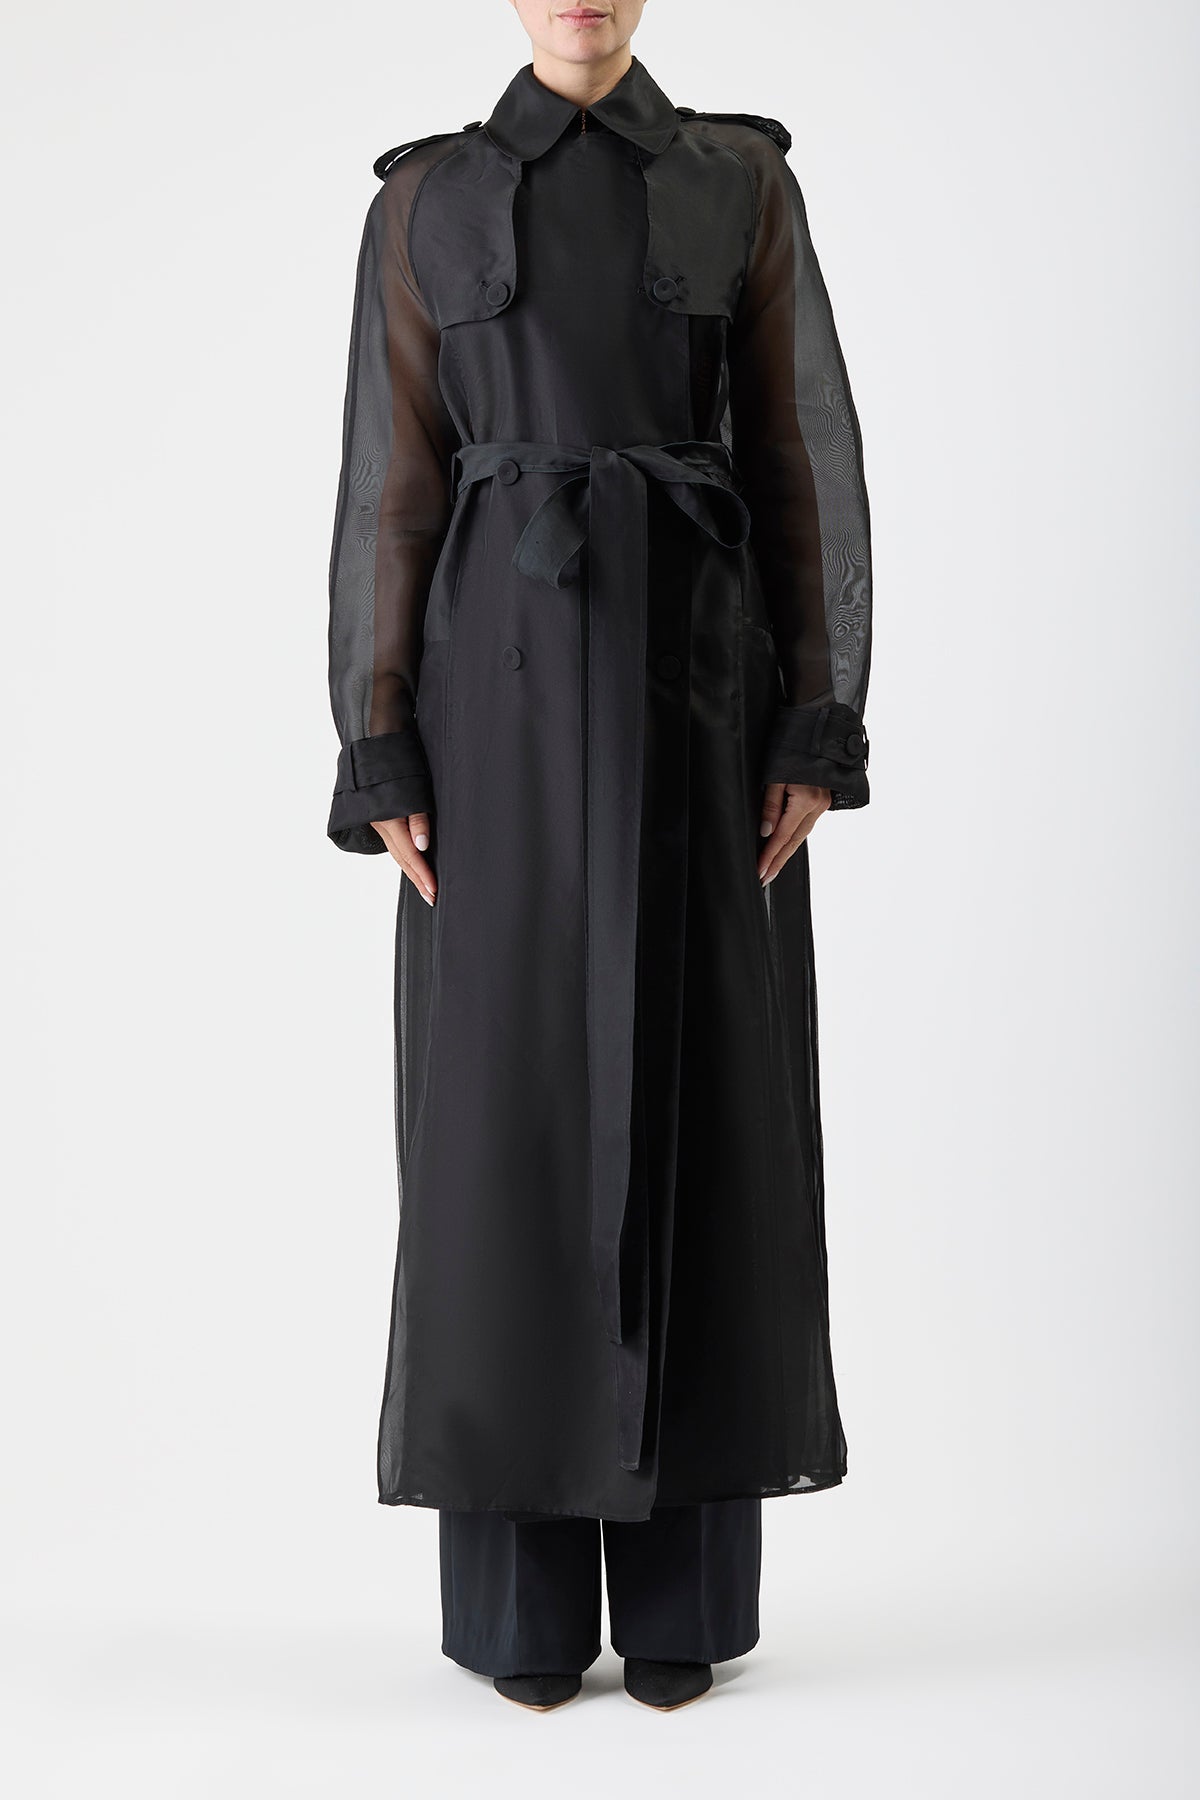 Eithne Sheer Trench Coat in Black Silk Organza